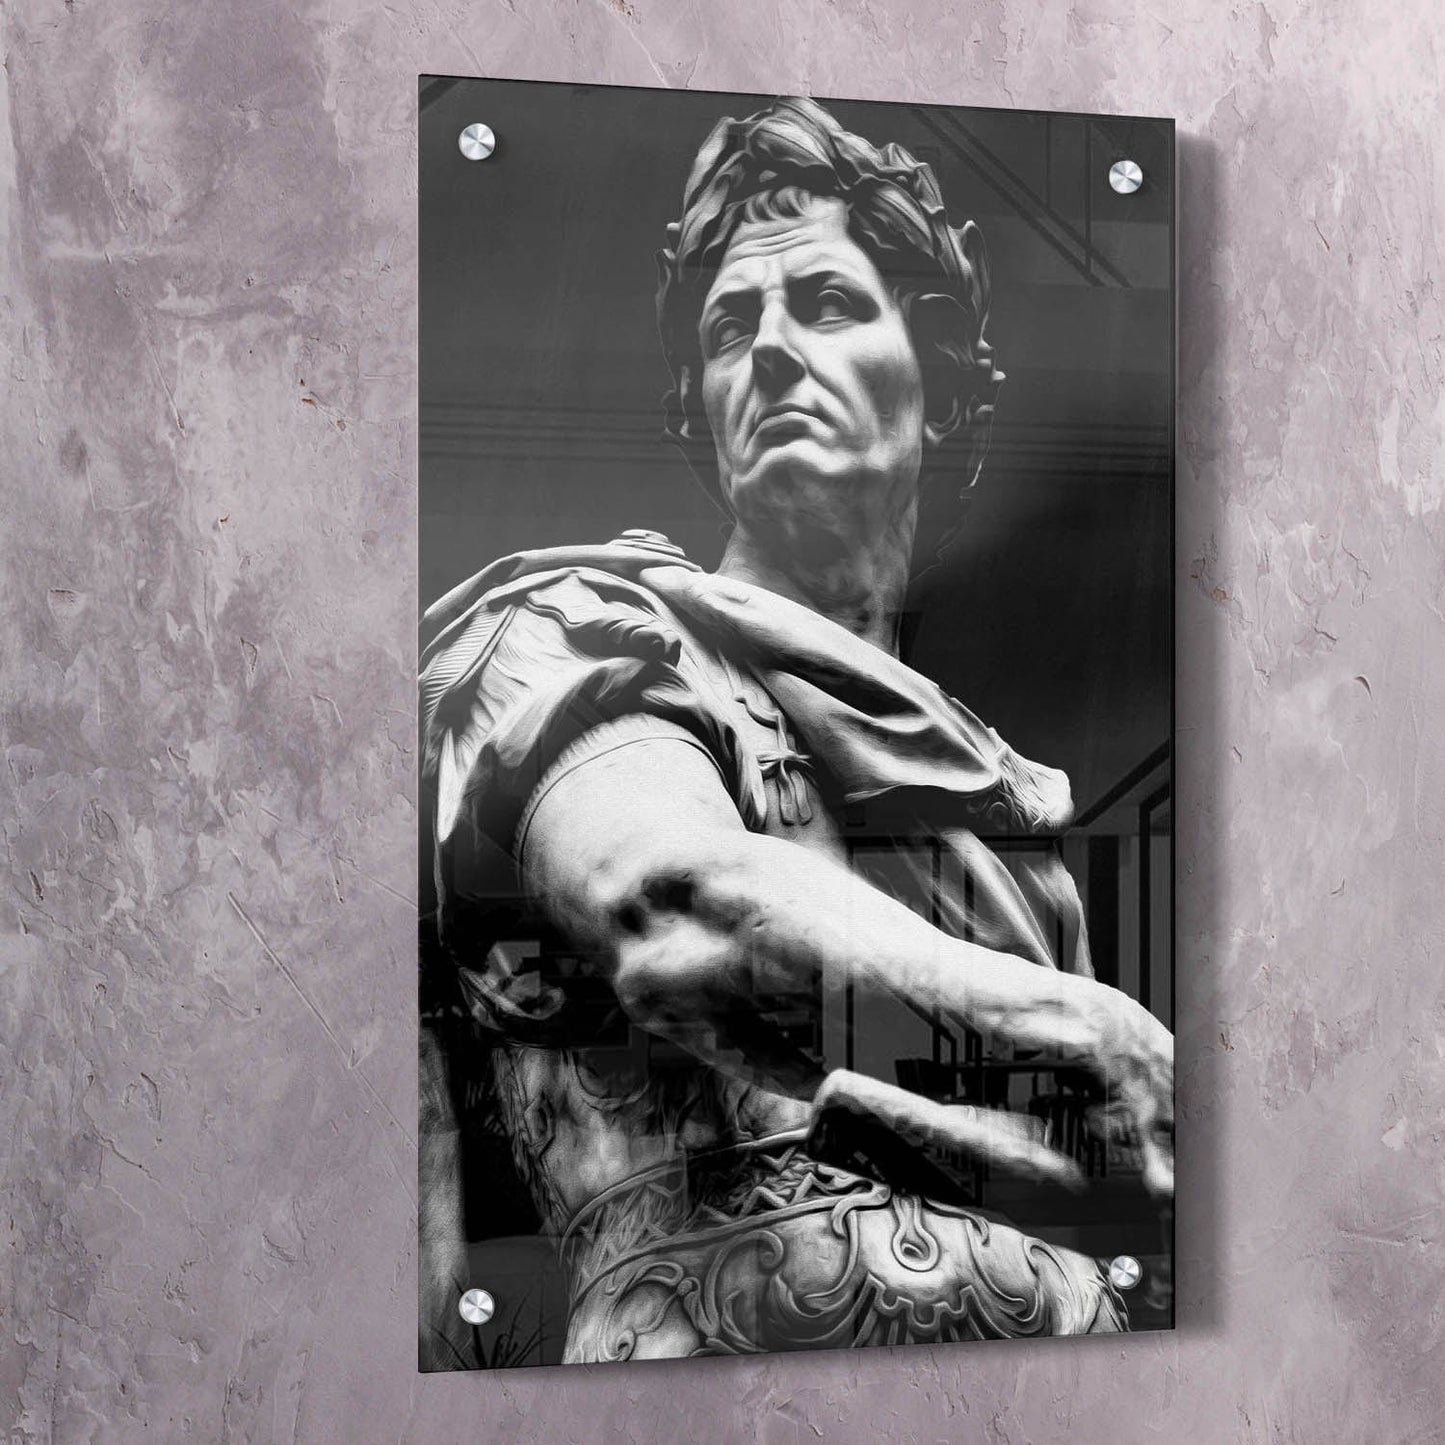 Julius Caesar Sculpture Black & White Wall Art | Inspirational Wall Art Motivational Wall Art Quotes Office Art | ImpaktMaker Exclusive Canvas Art Portrait